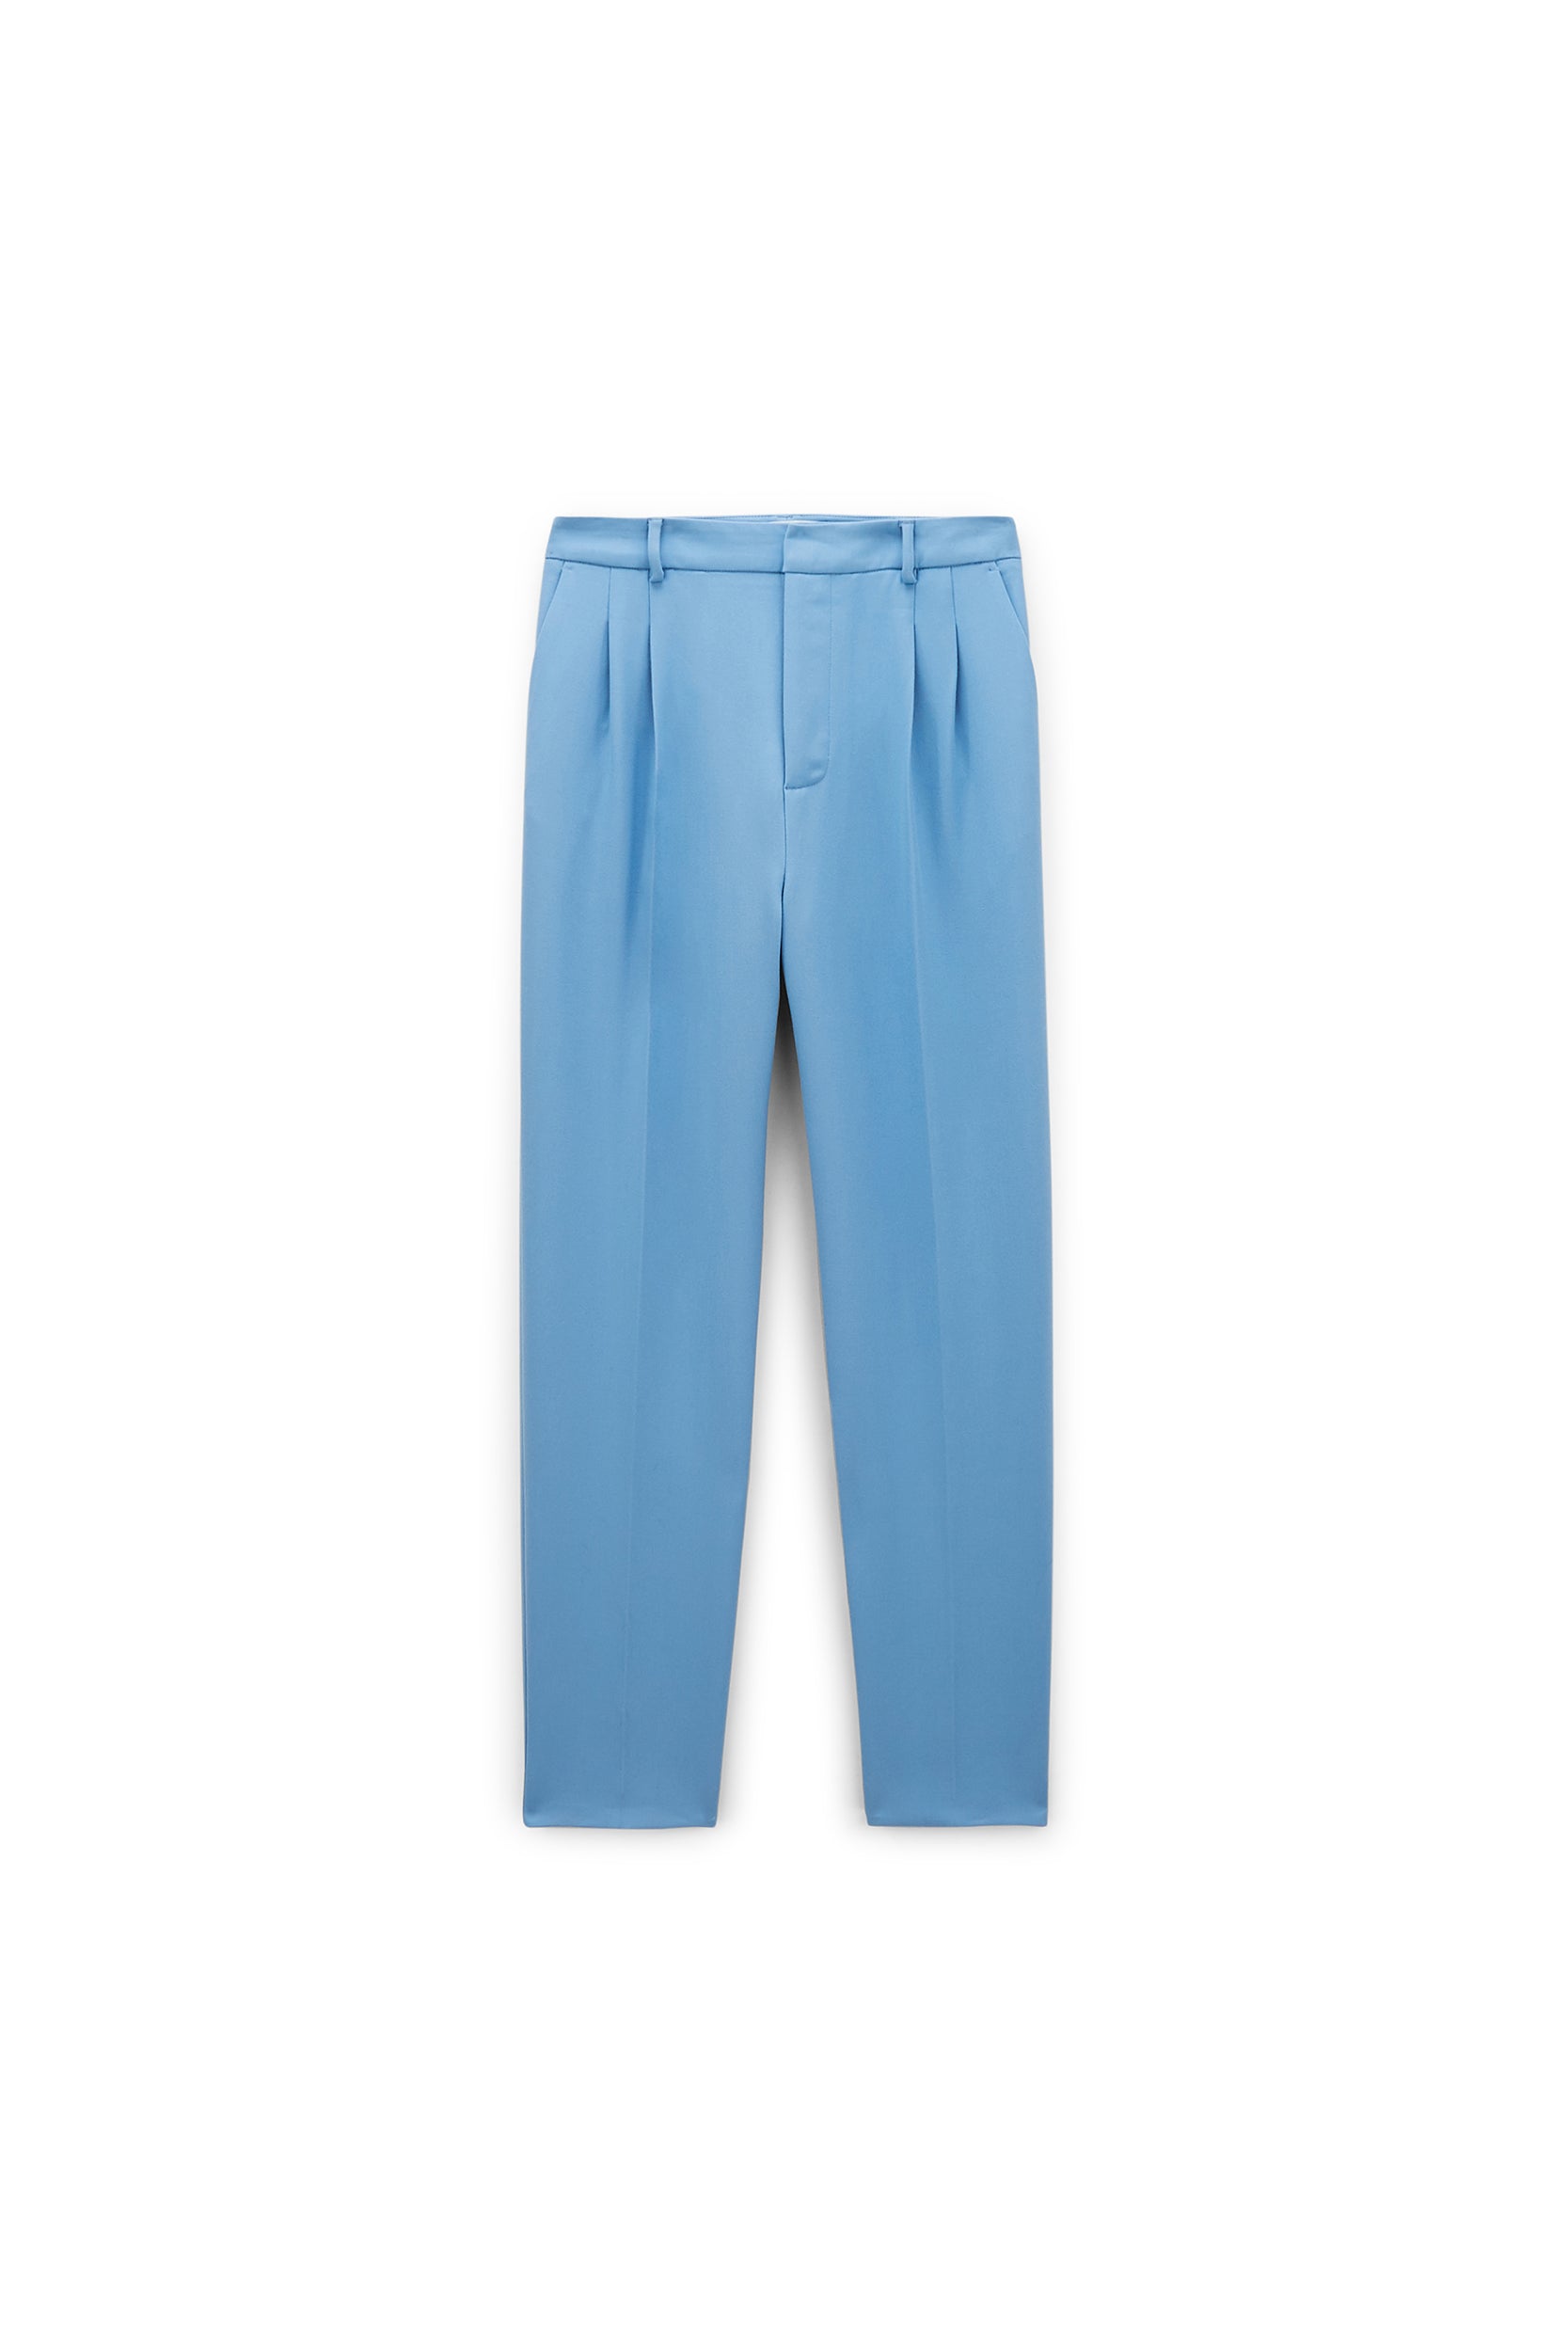 Sky blue Abramo trousers